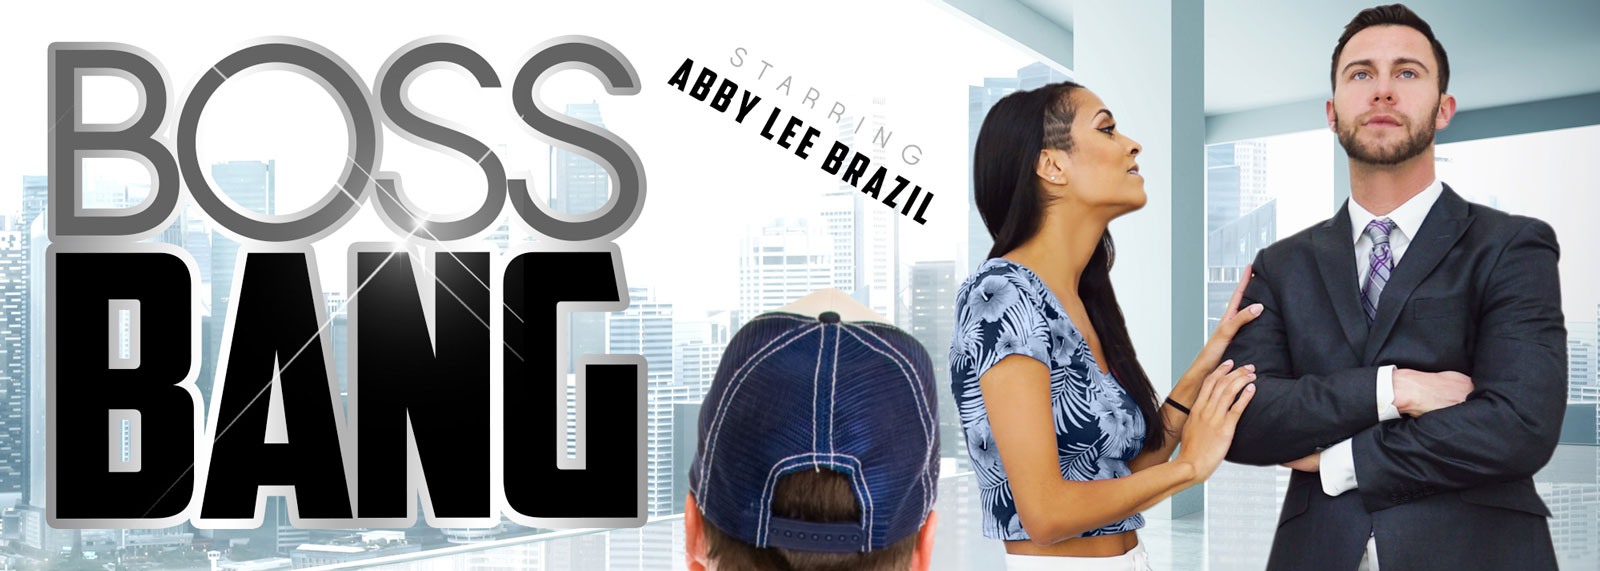 Boss Bang with Abby Lee Brazil  Slideshow